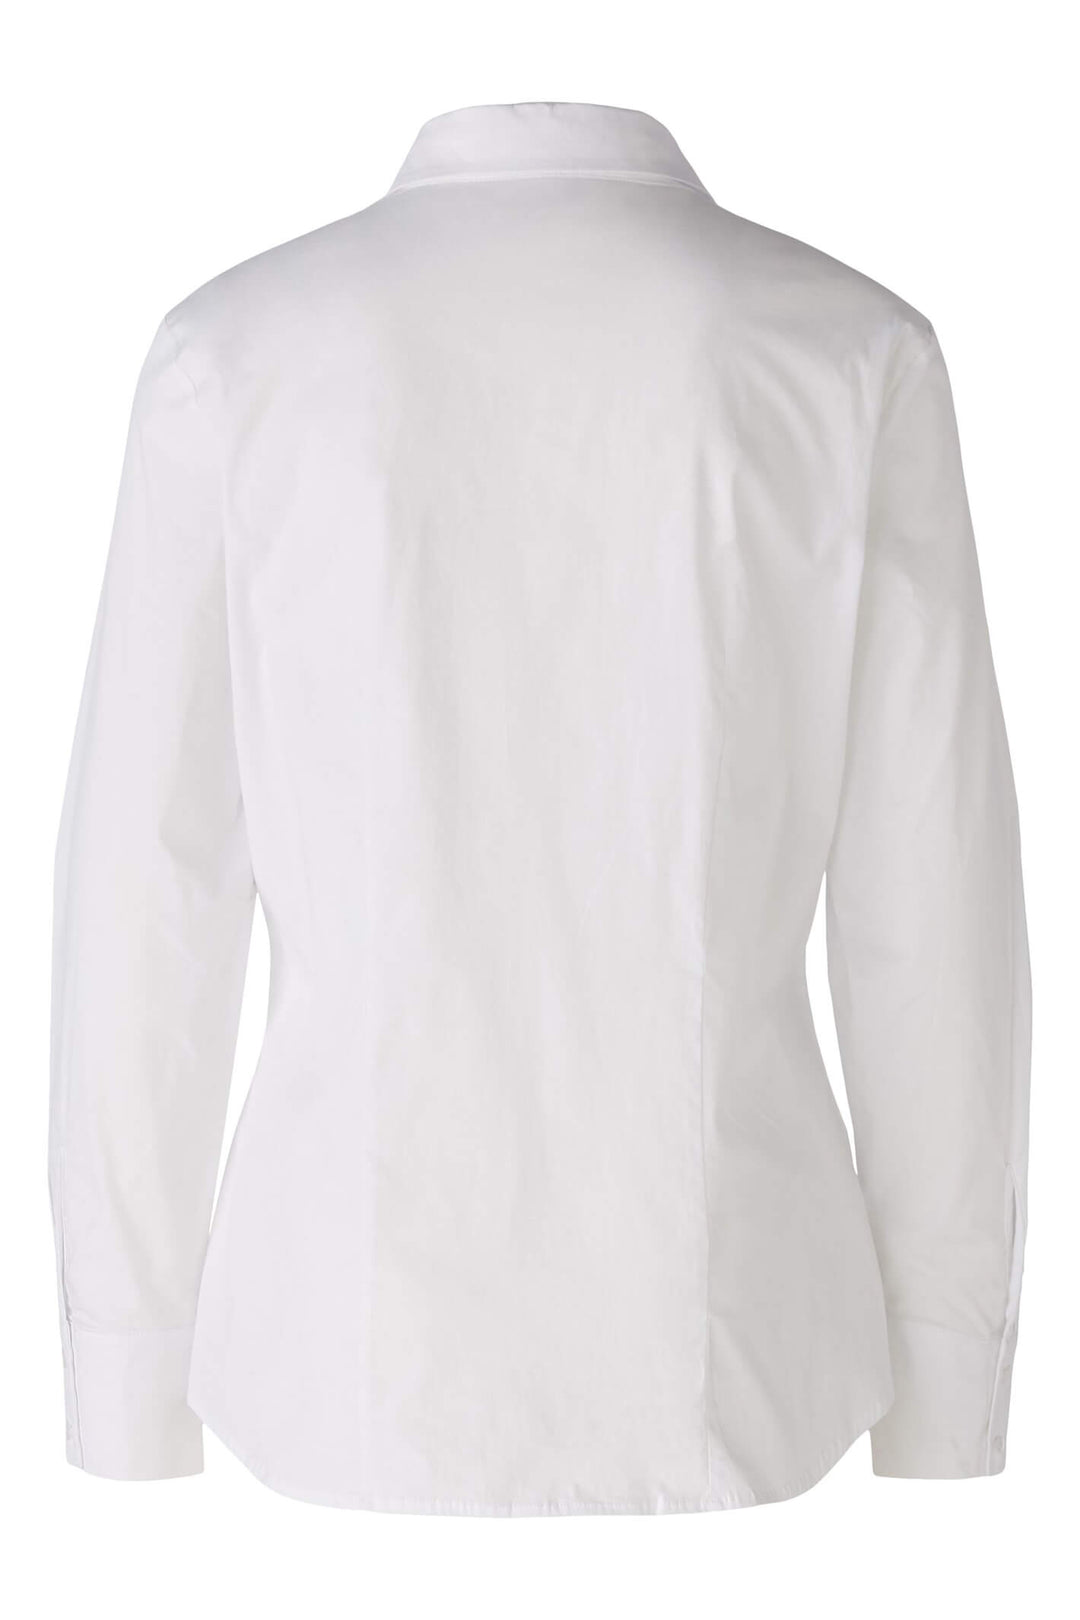 Oui 79819 1002 Optic White Shirt - Shirley Allum Boutique